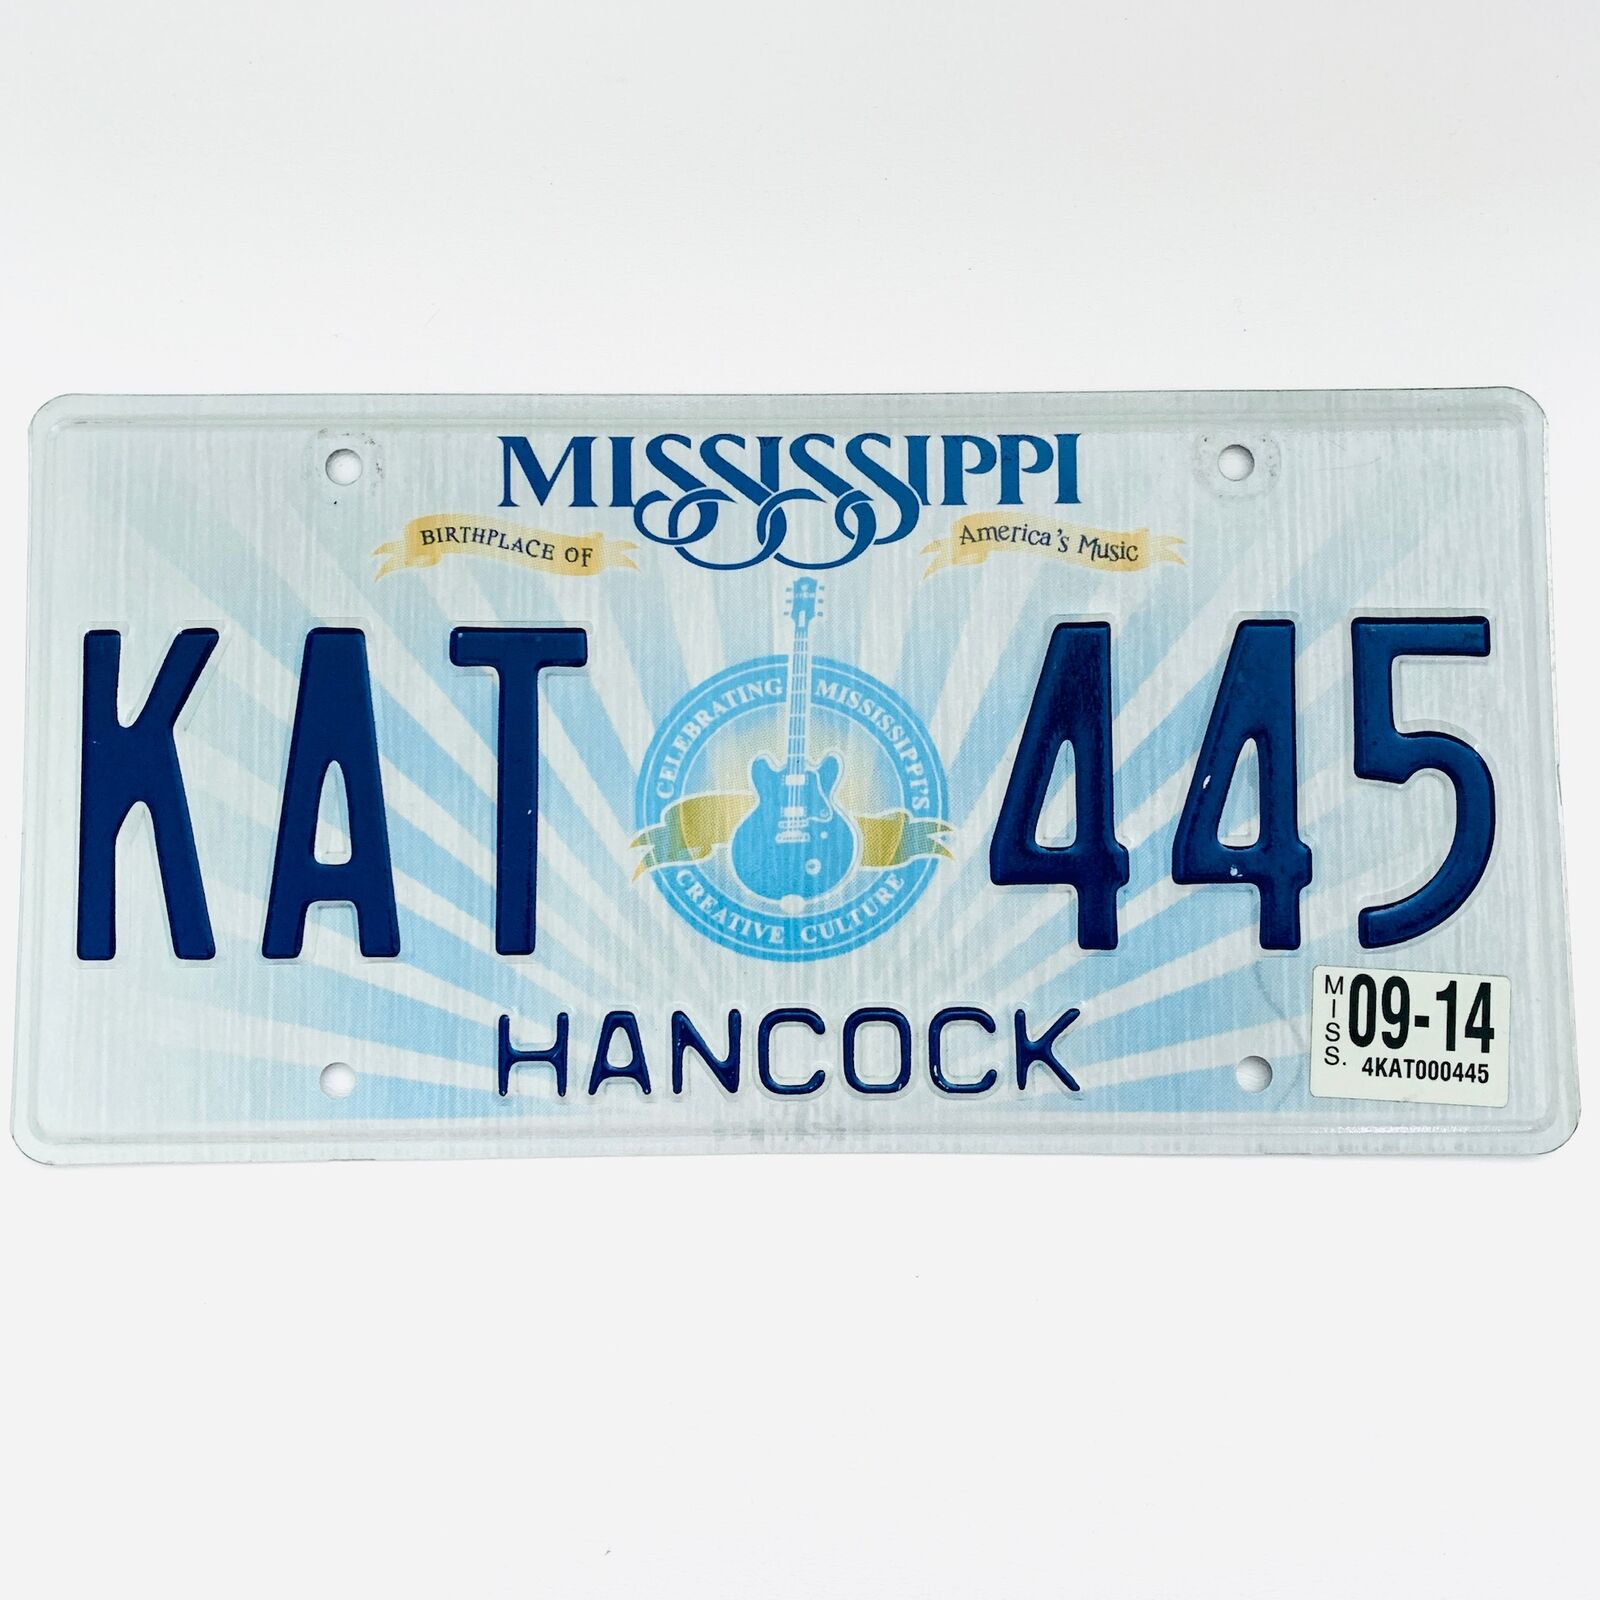 2014 United States Mississippi Hancock County Passenger License Plate KAT 445